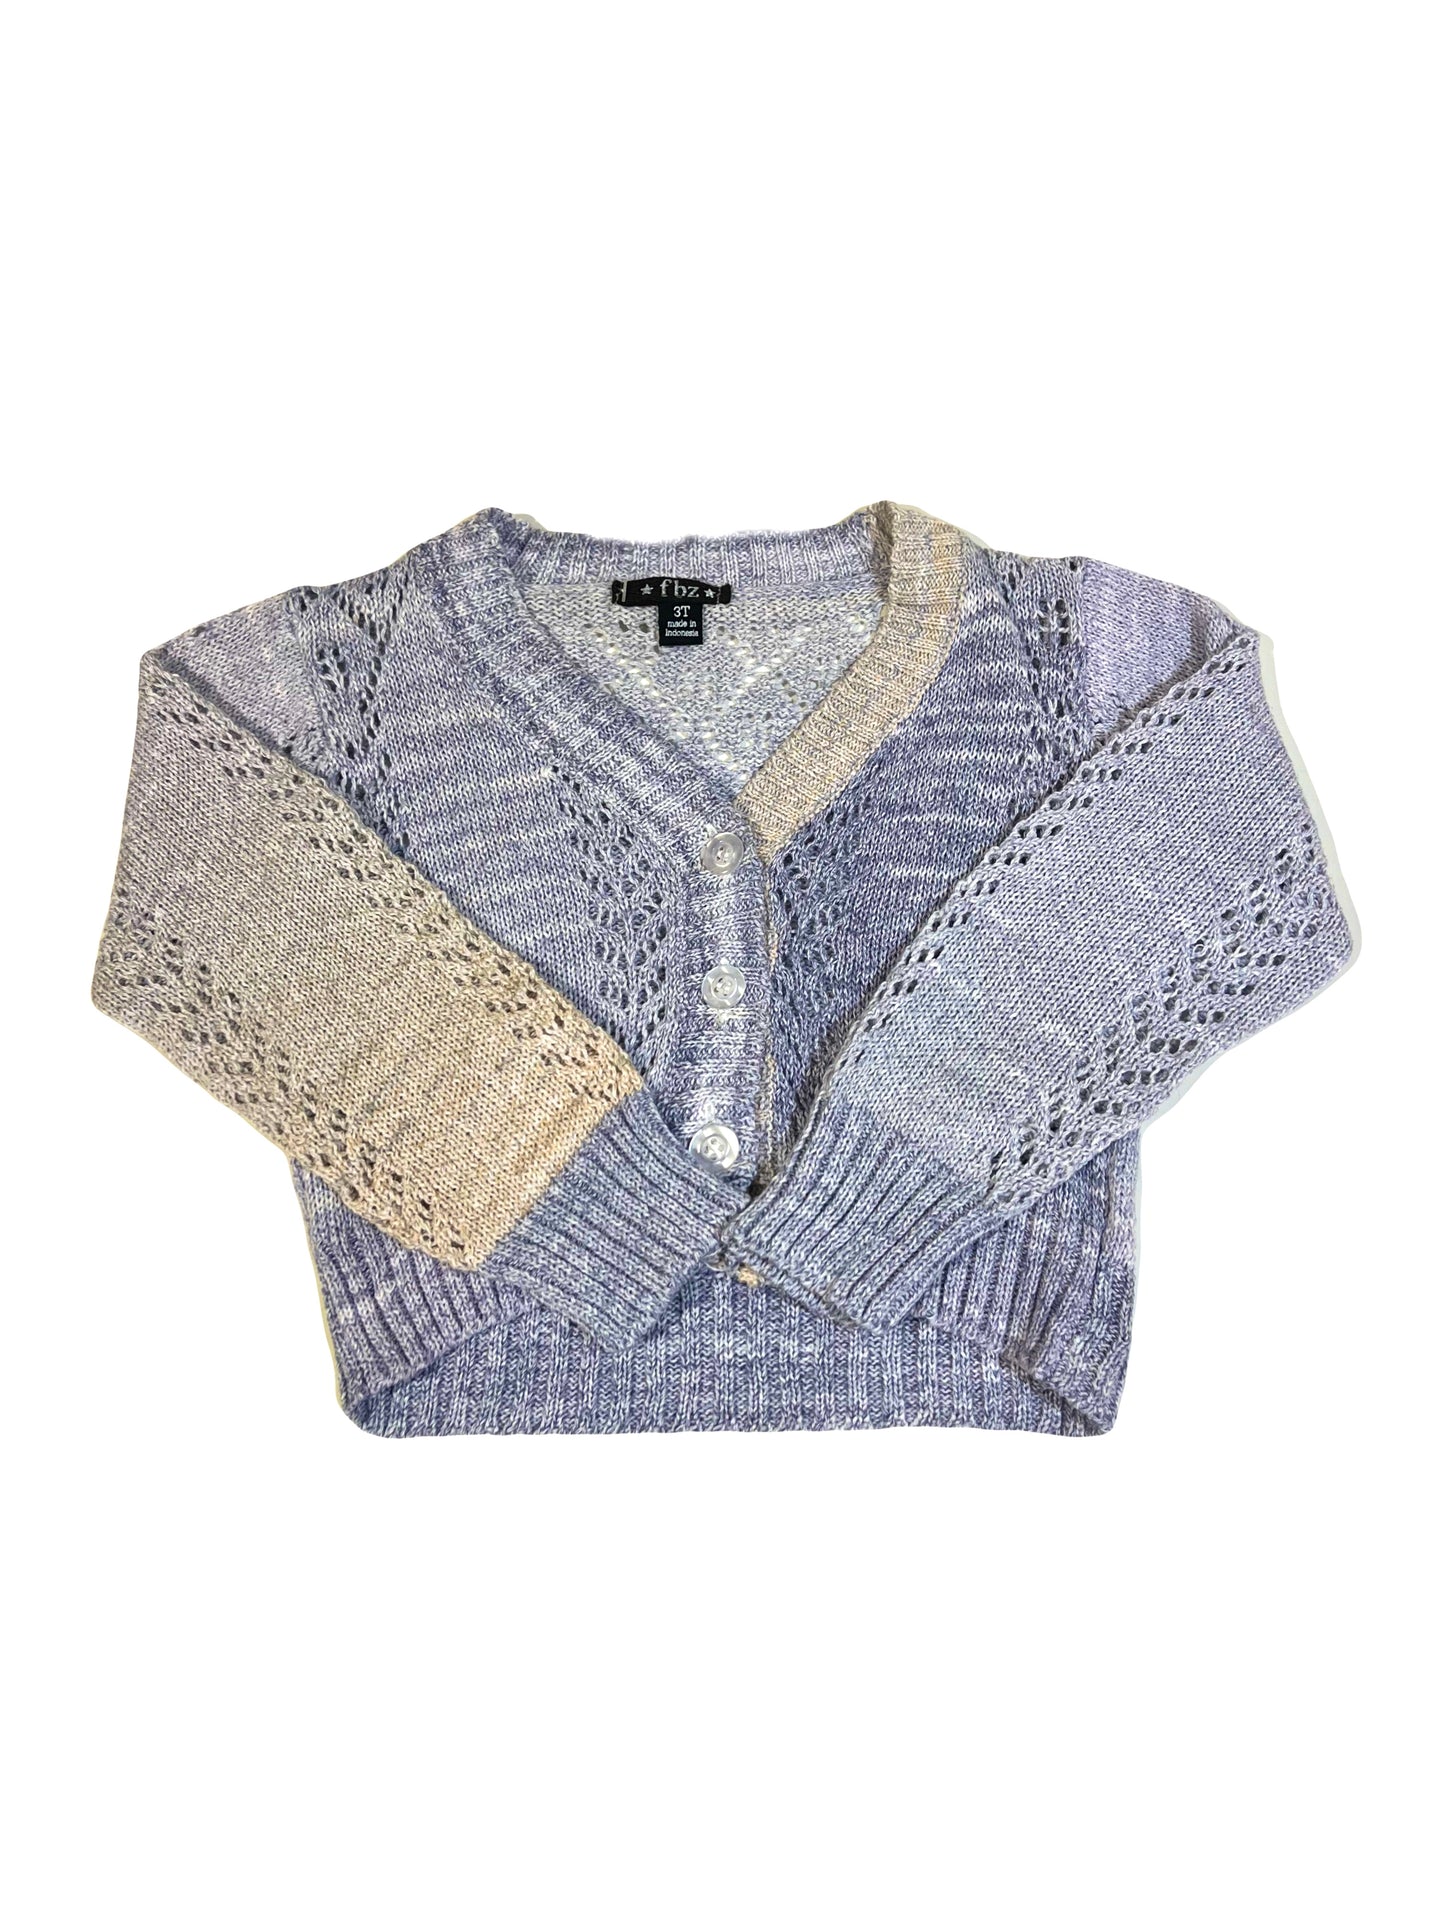 Yellow/Lavender/Grey Cardigan-Sweater